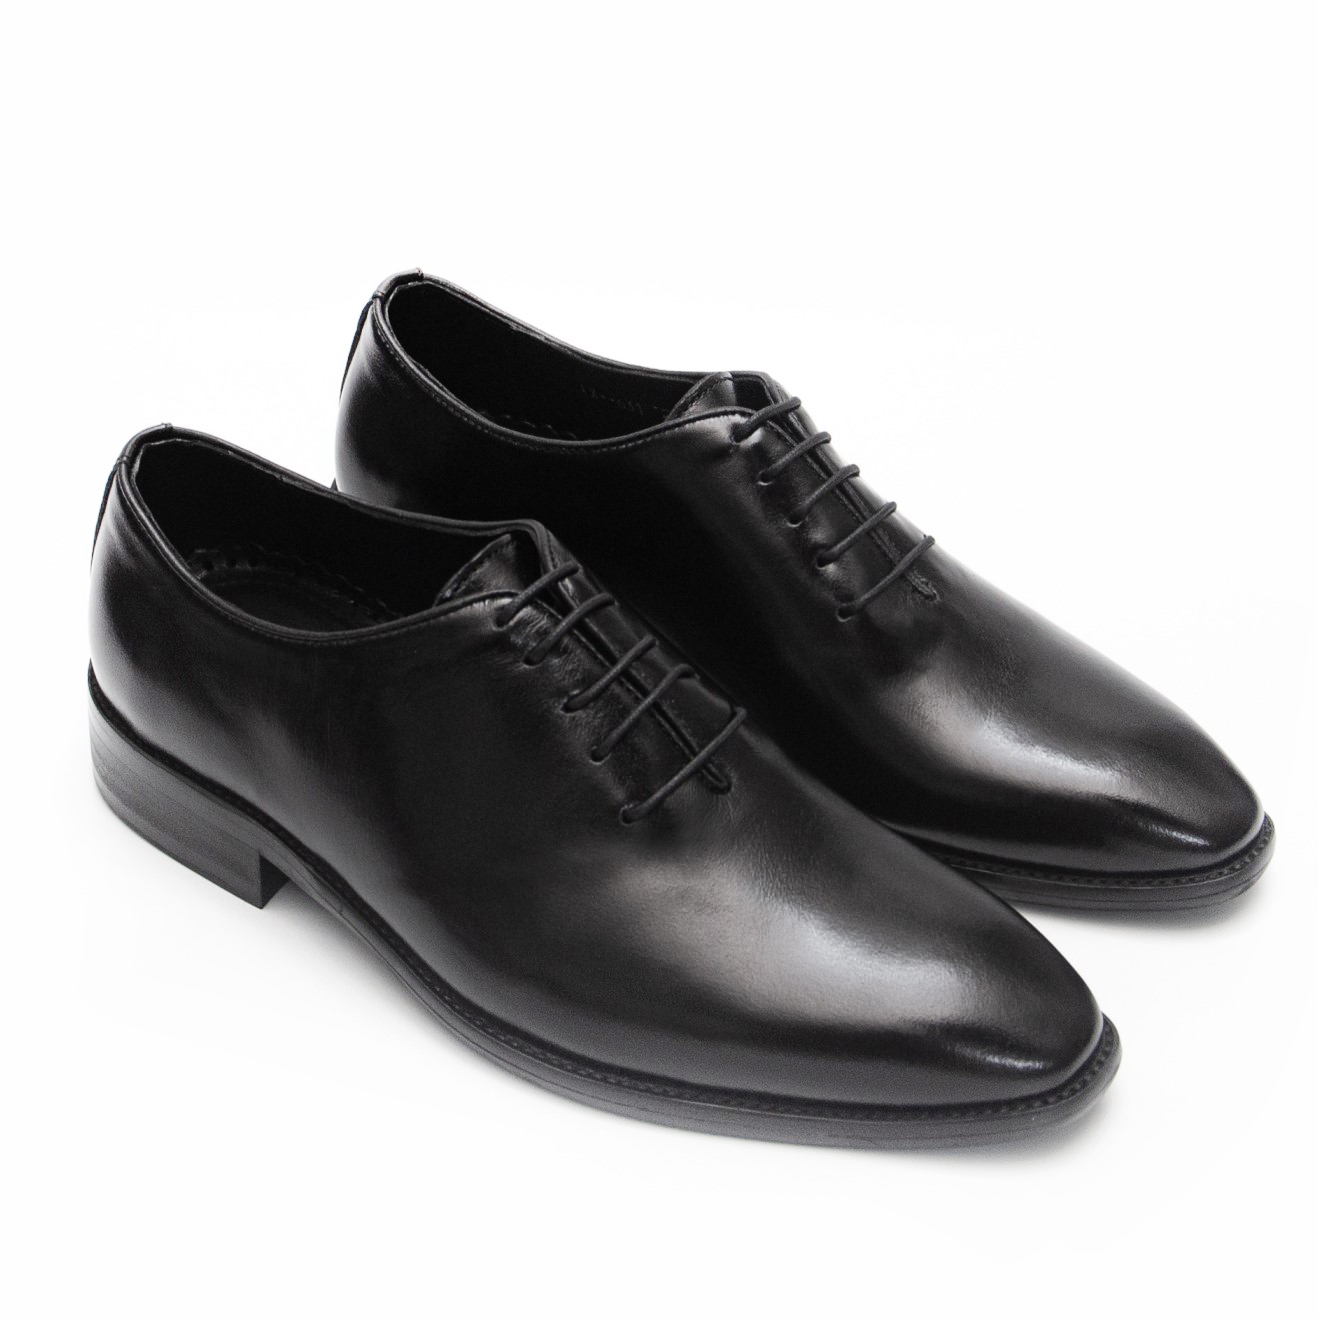 Giày da nam Oxford - Màu đen F63240 - S2023